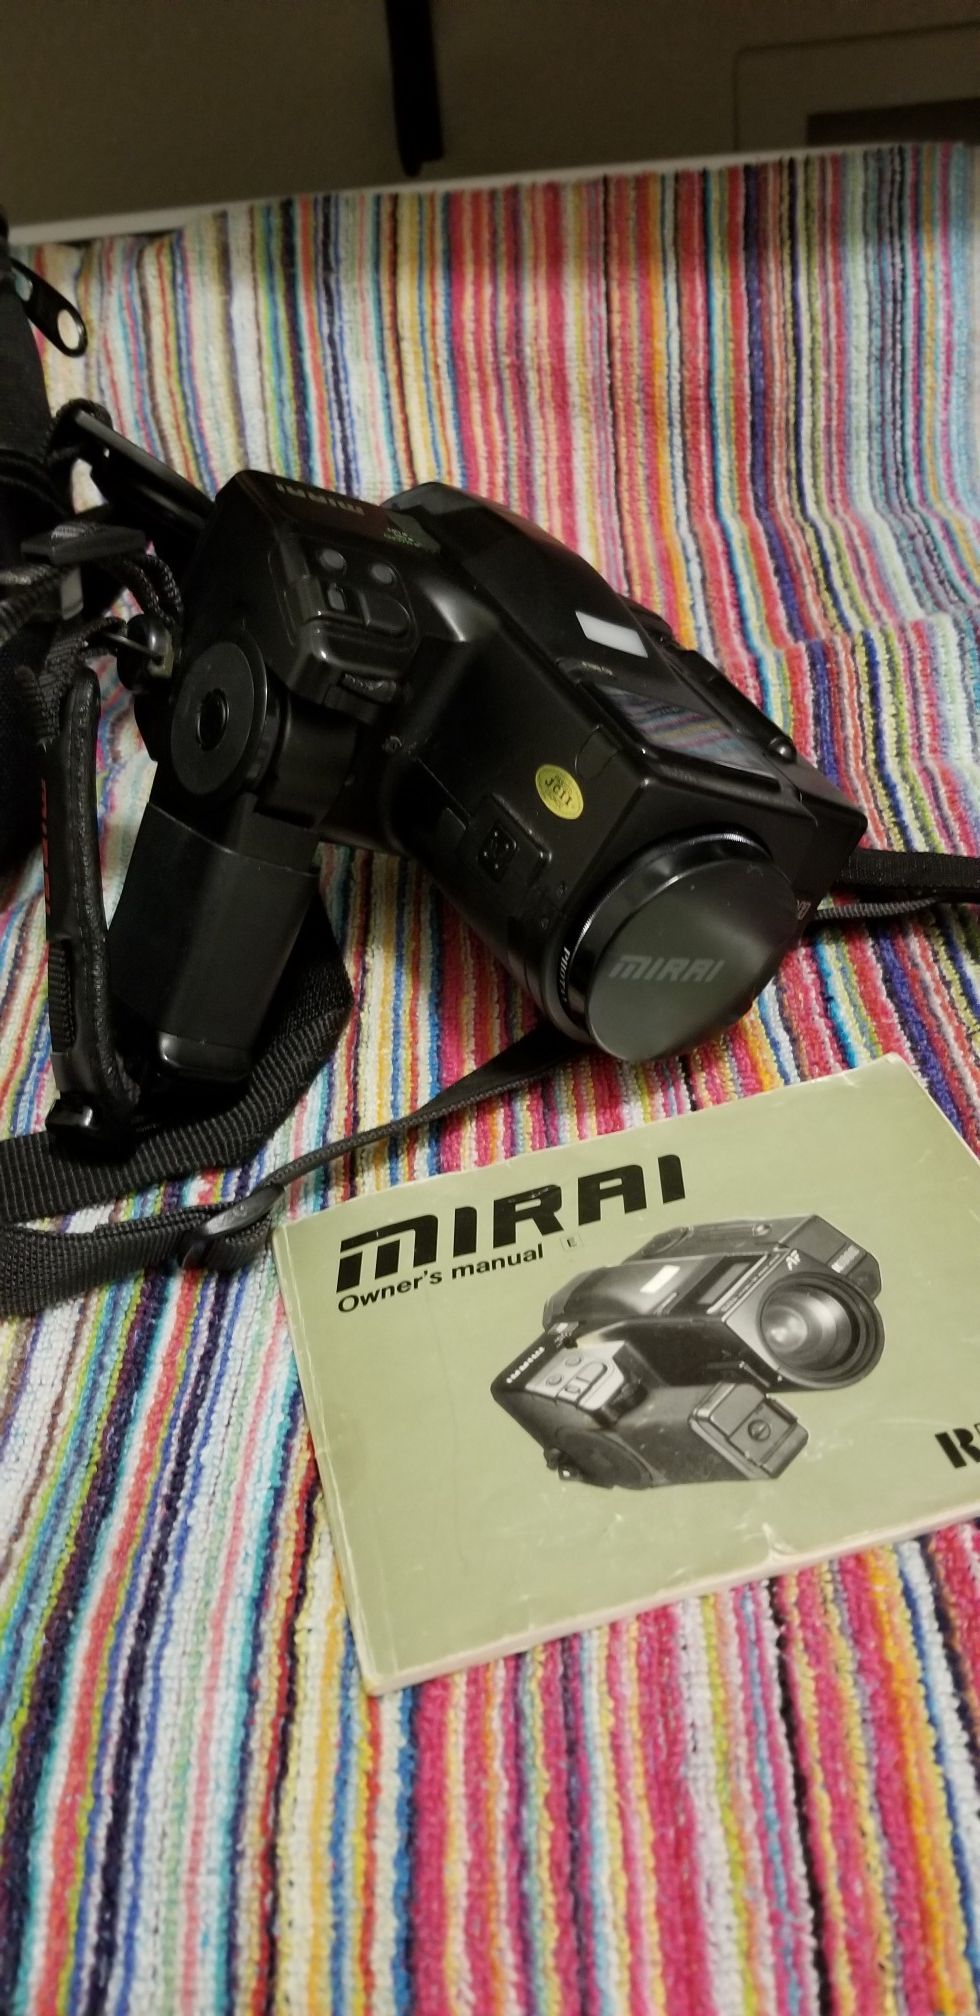 Vintage Ricoh Mirai 35mm camera